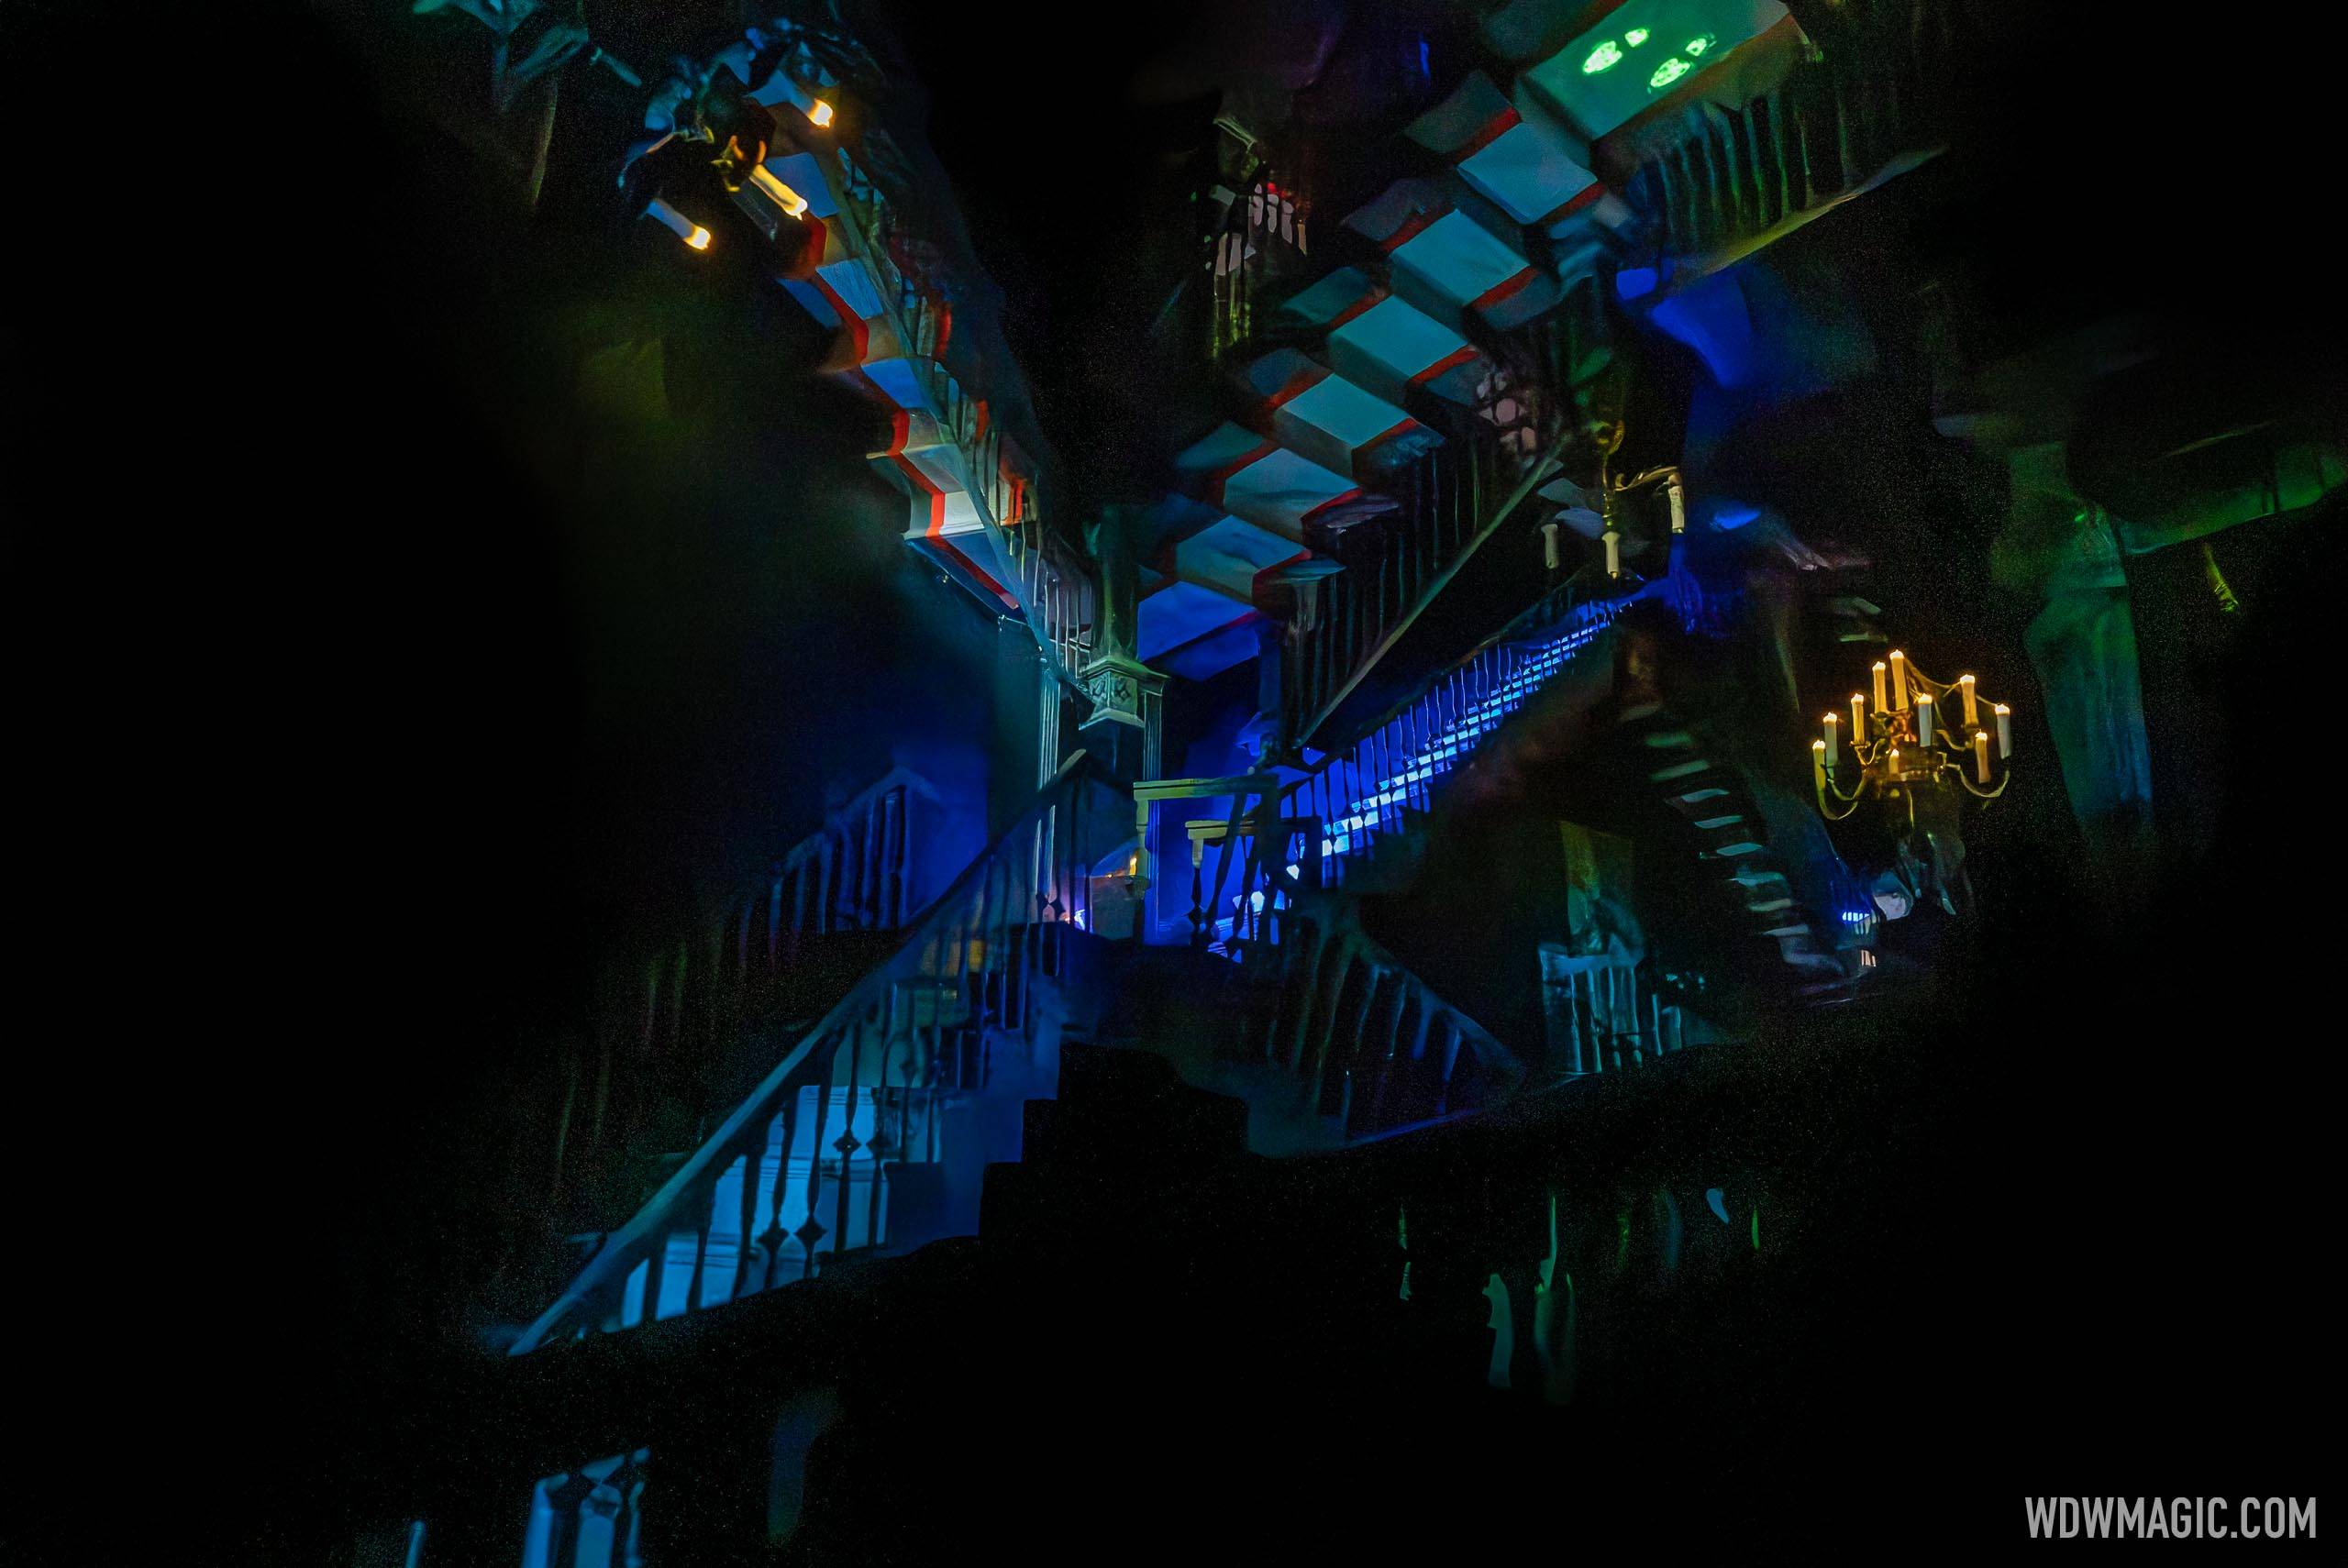 Walt Disney World's Haunted Mansion now closed for refurbishment